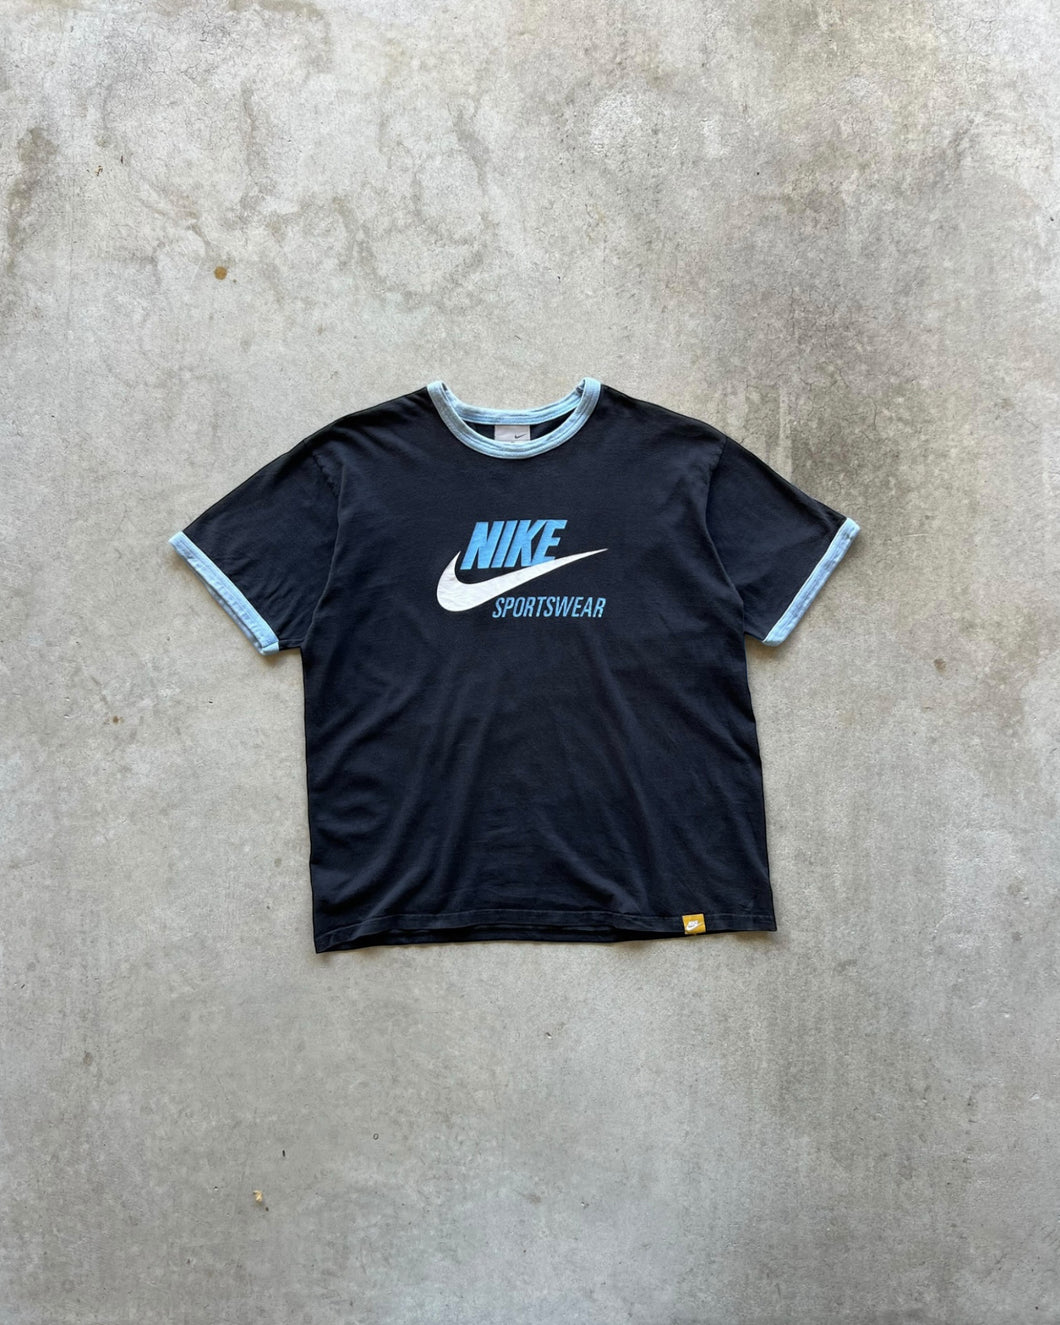 Vintage Nike Ringer T-Shirt - XL